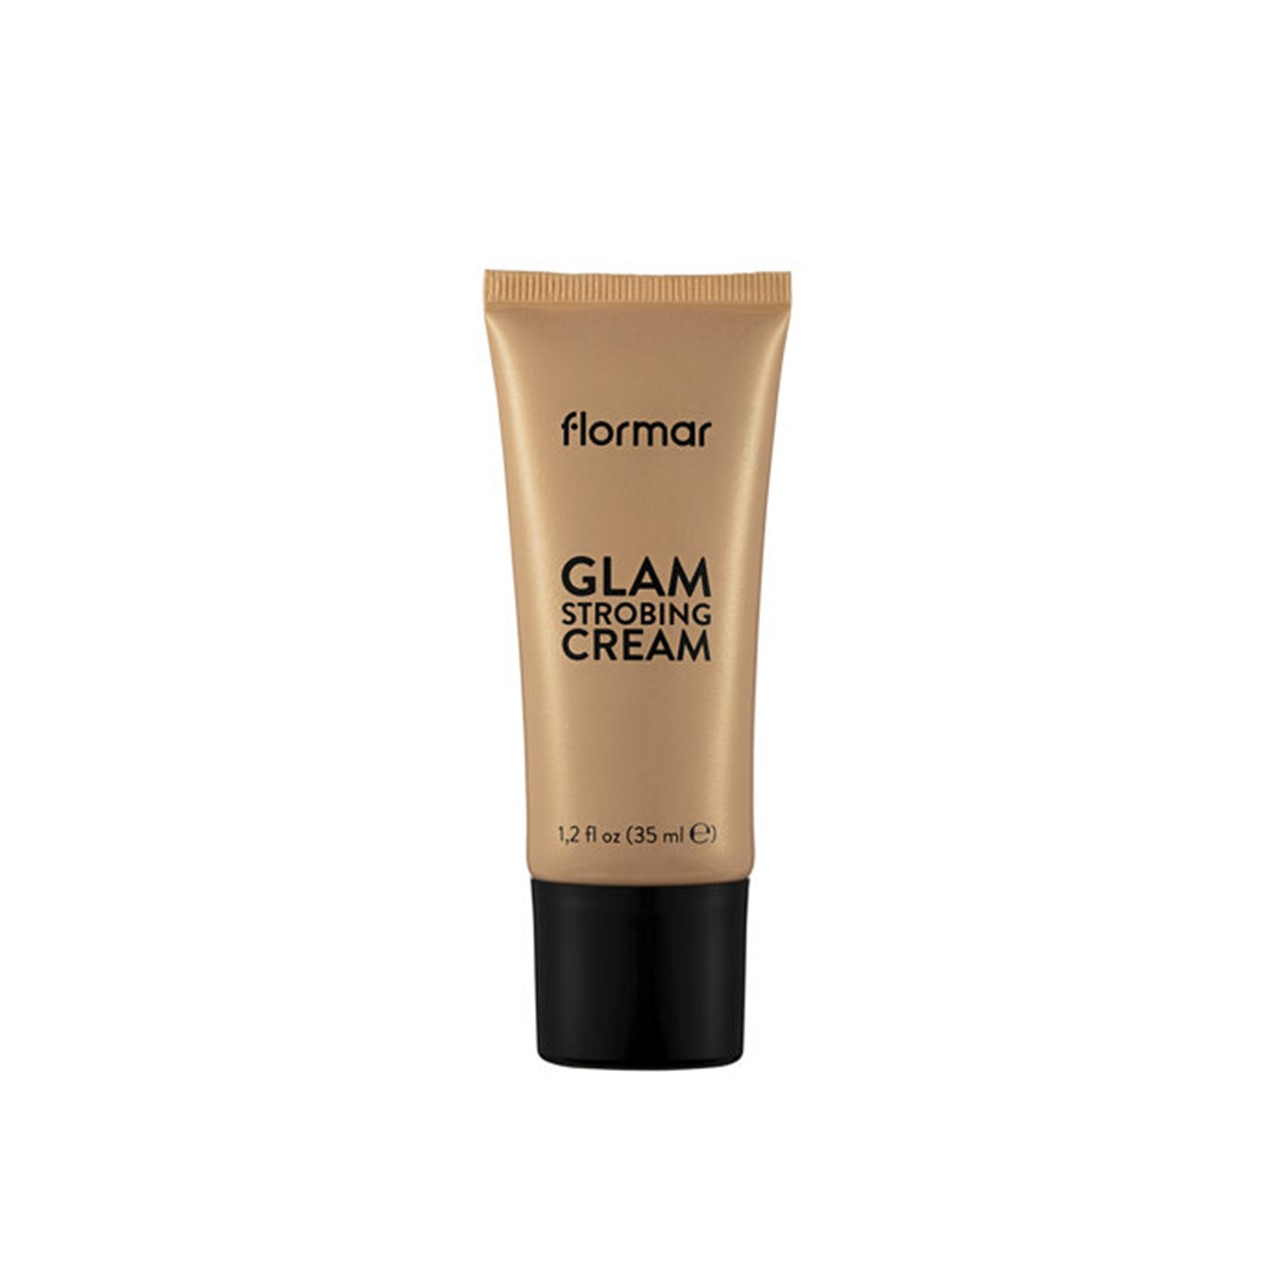 Flormar Glam Strobing Cream 02 Peach 35ml